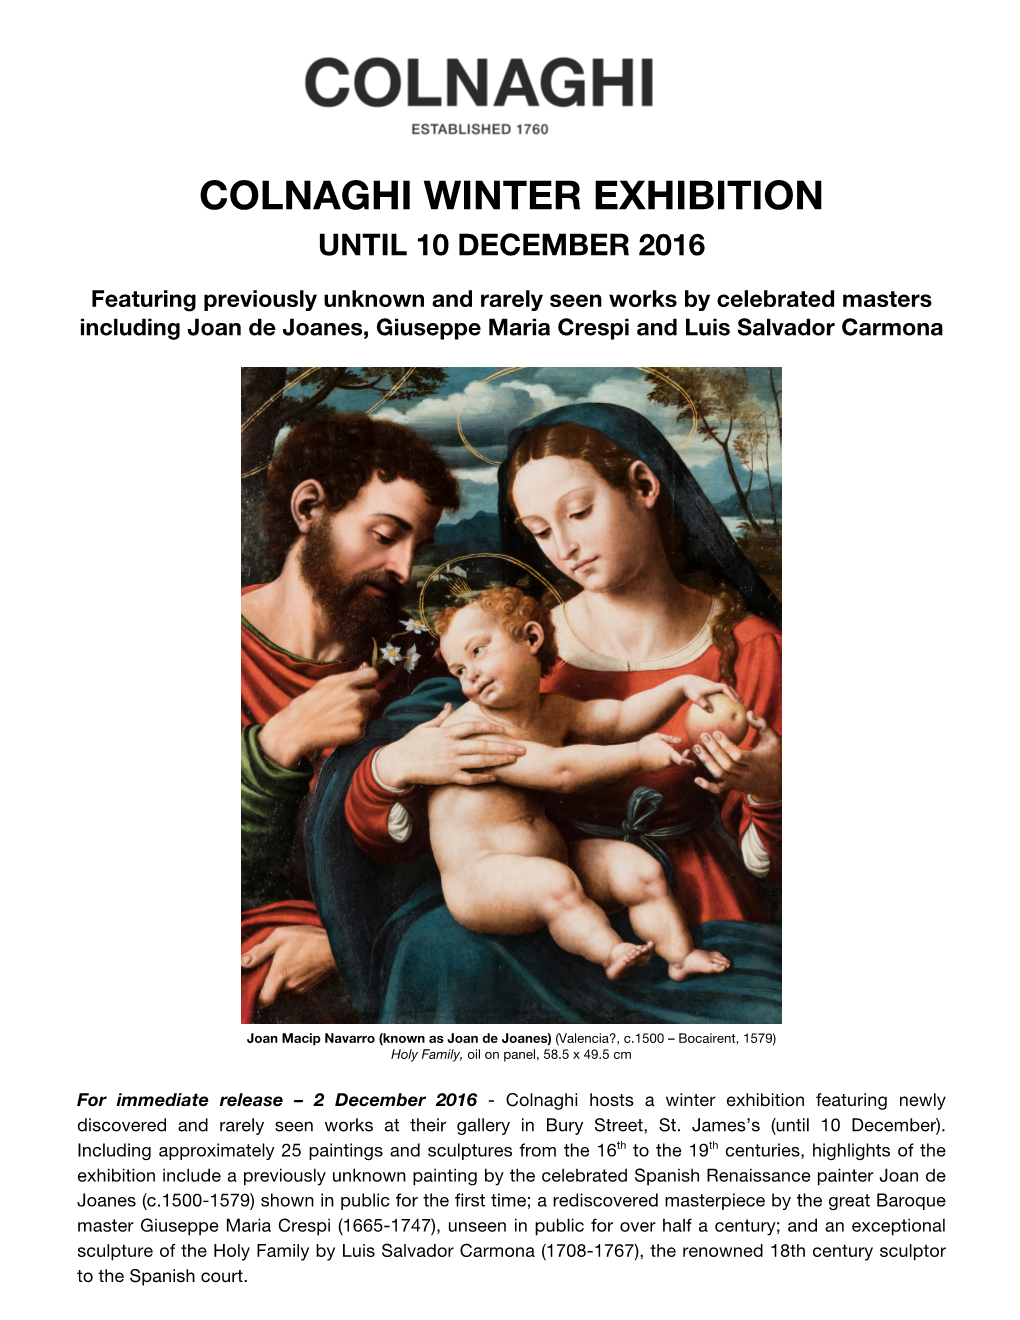 Colnaghi Winter Exhibition Until 10 December 2016